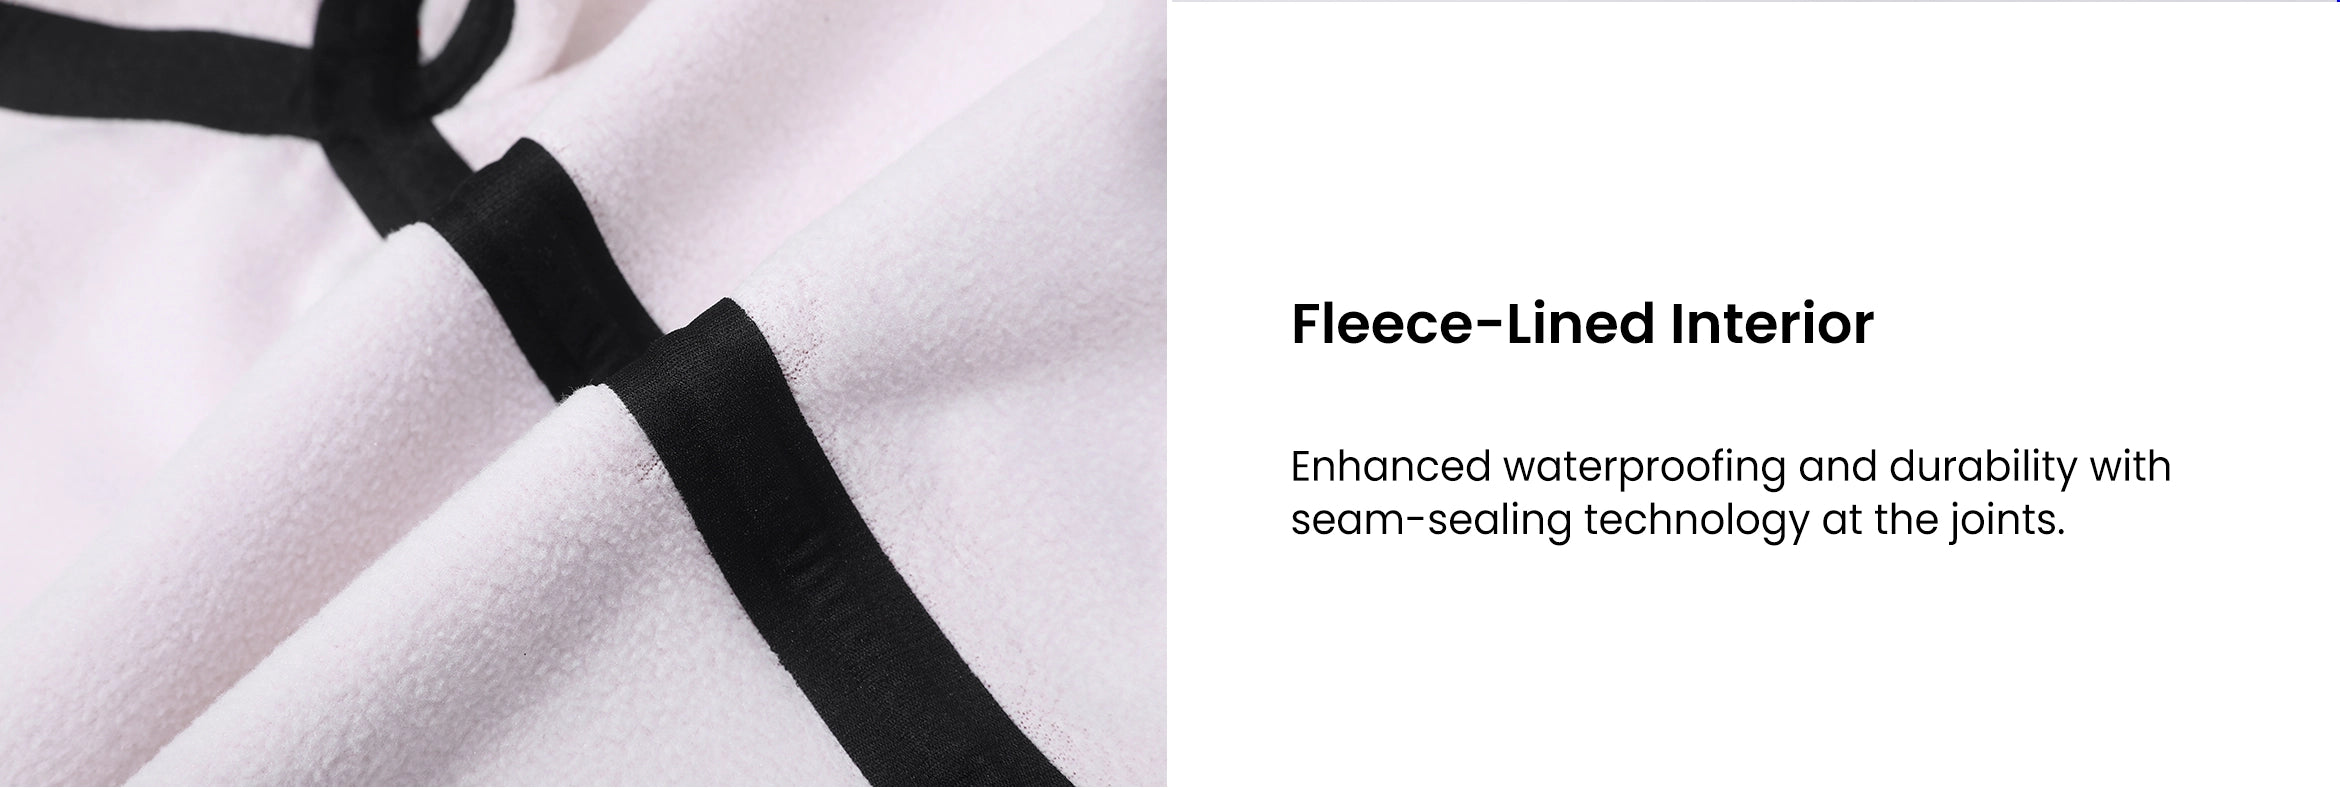 10. Fleece-Lined Interior